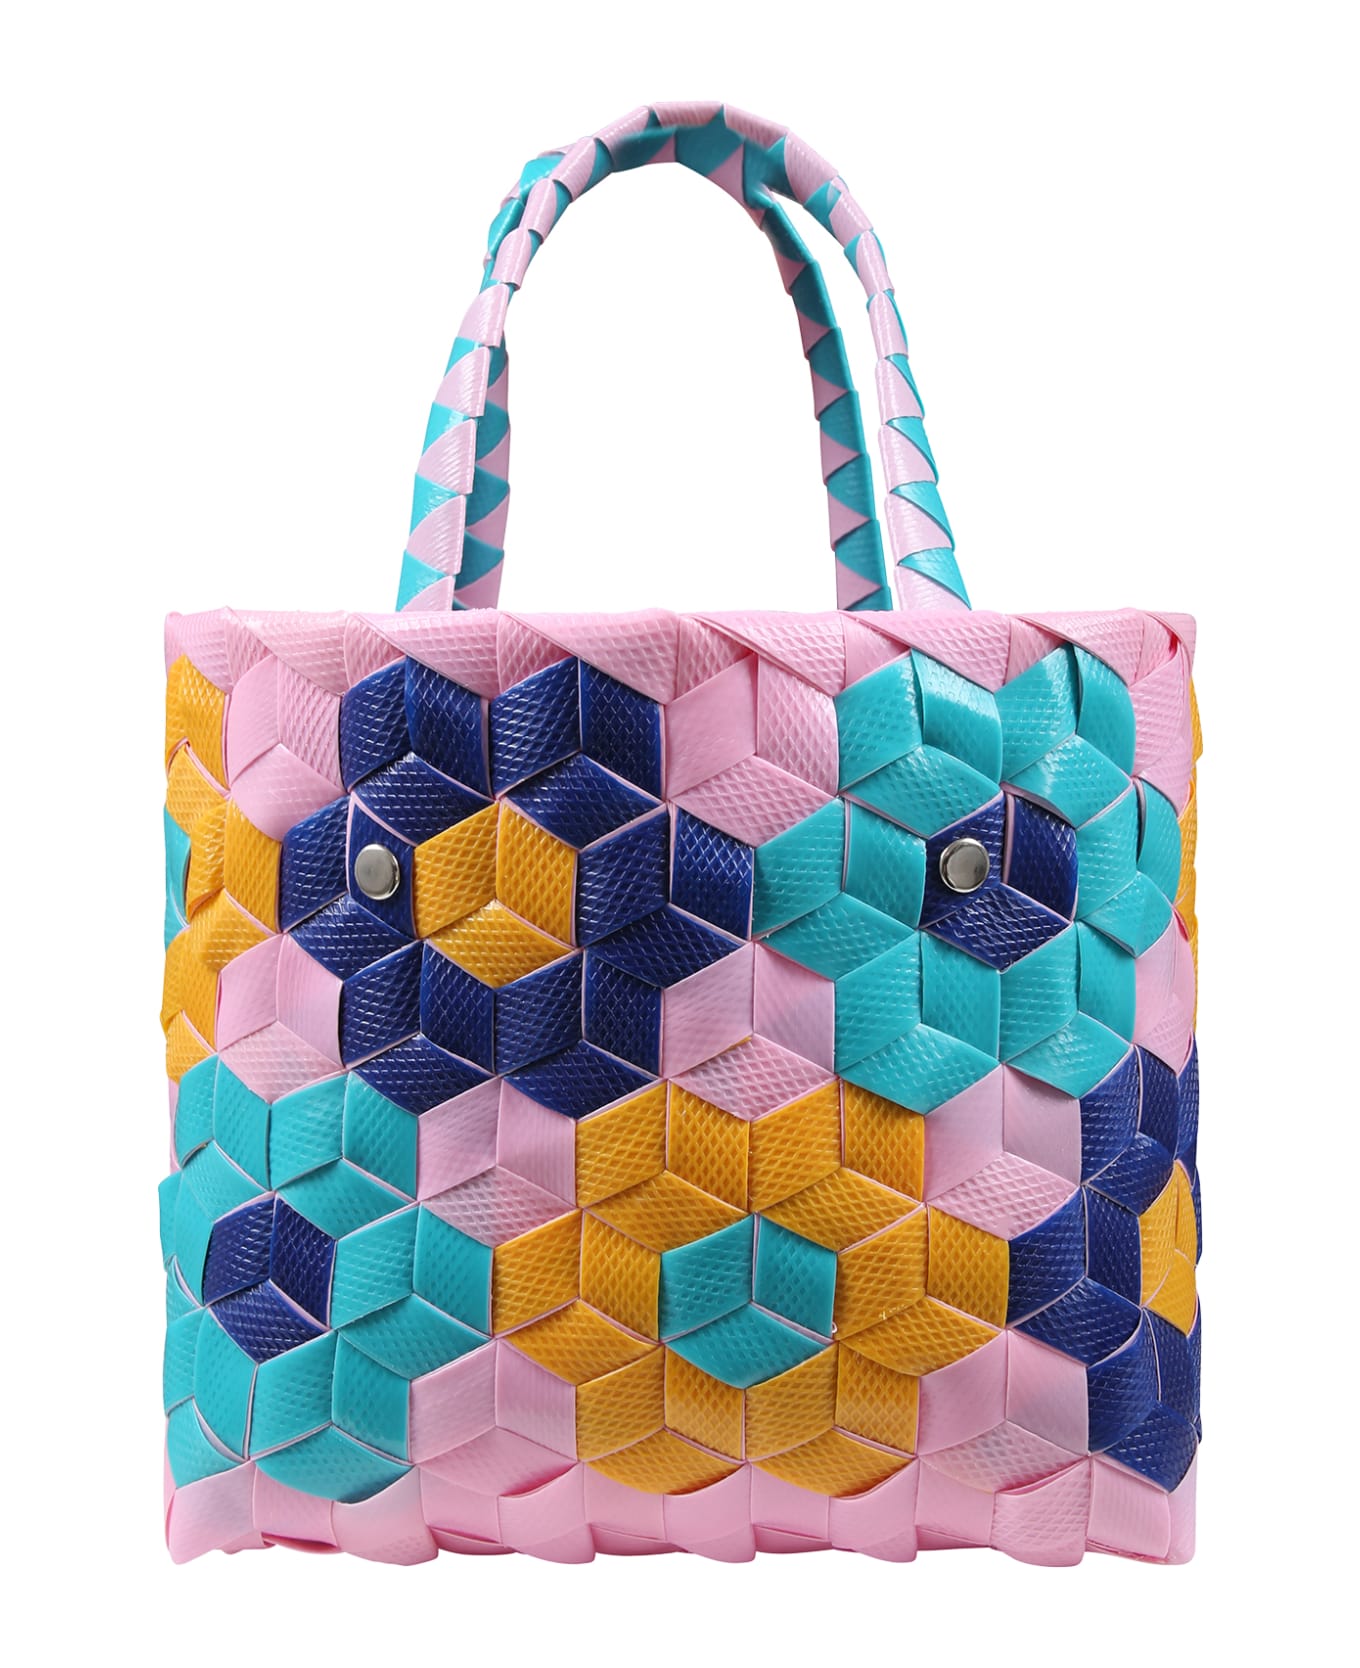 Marni Multicolor Bag For Girl With Logo - Pink